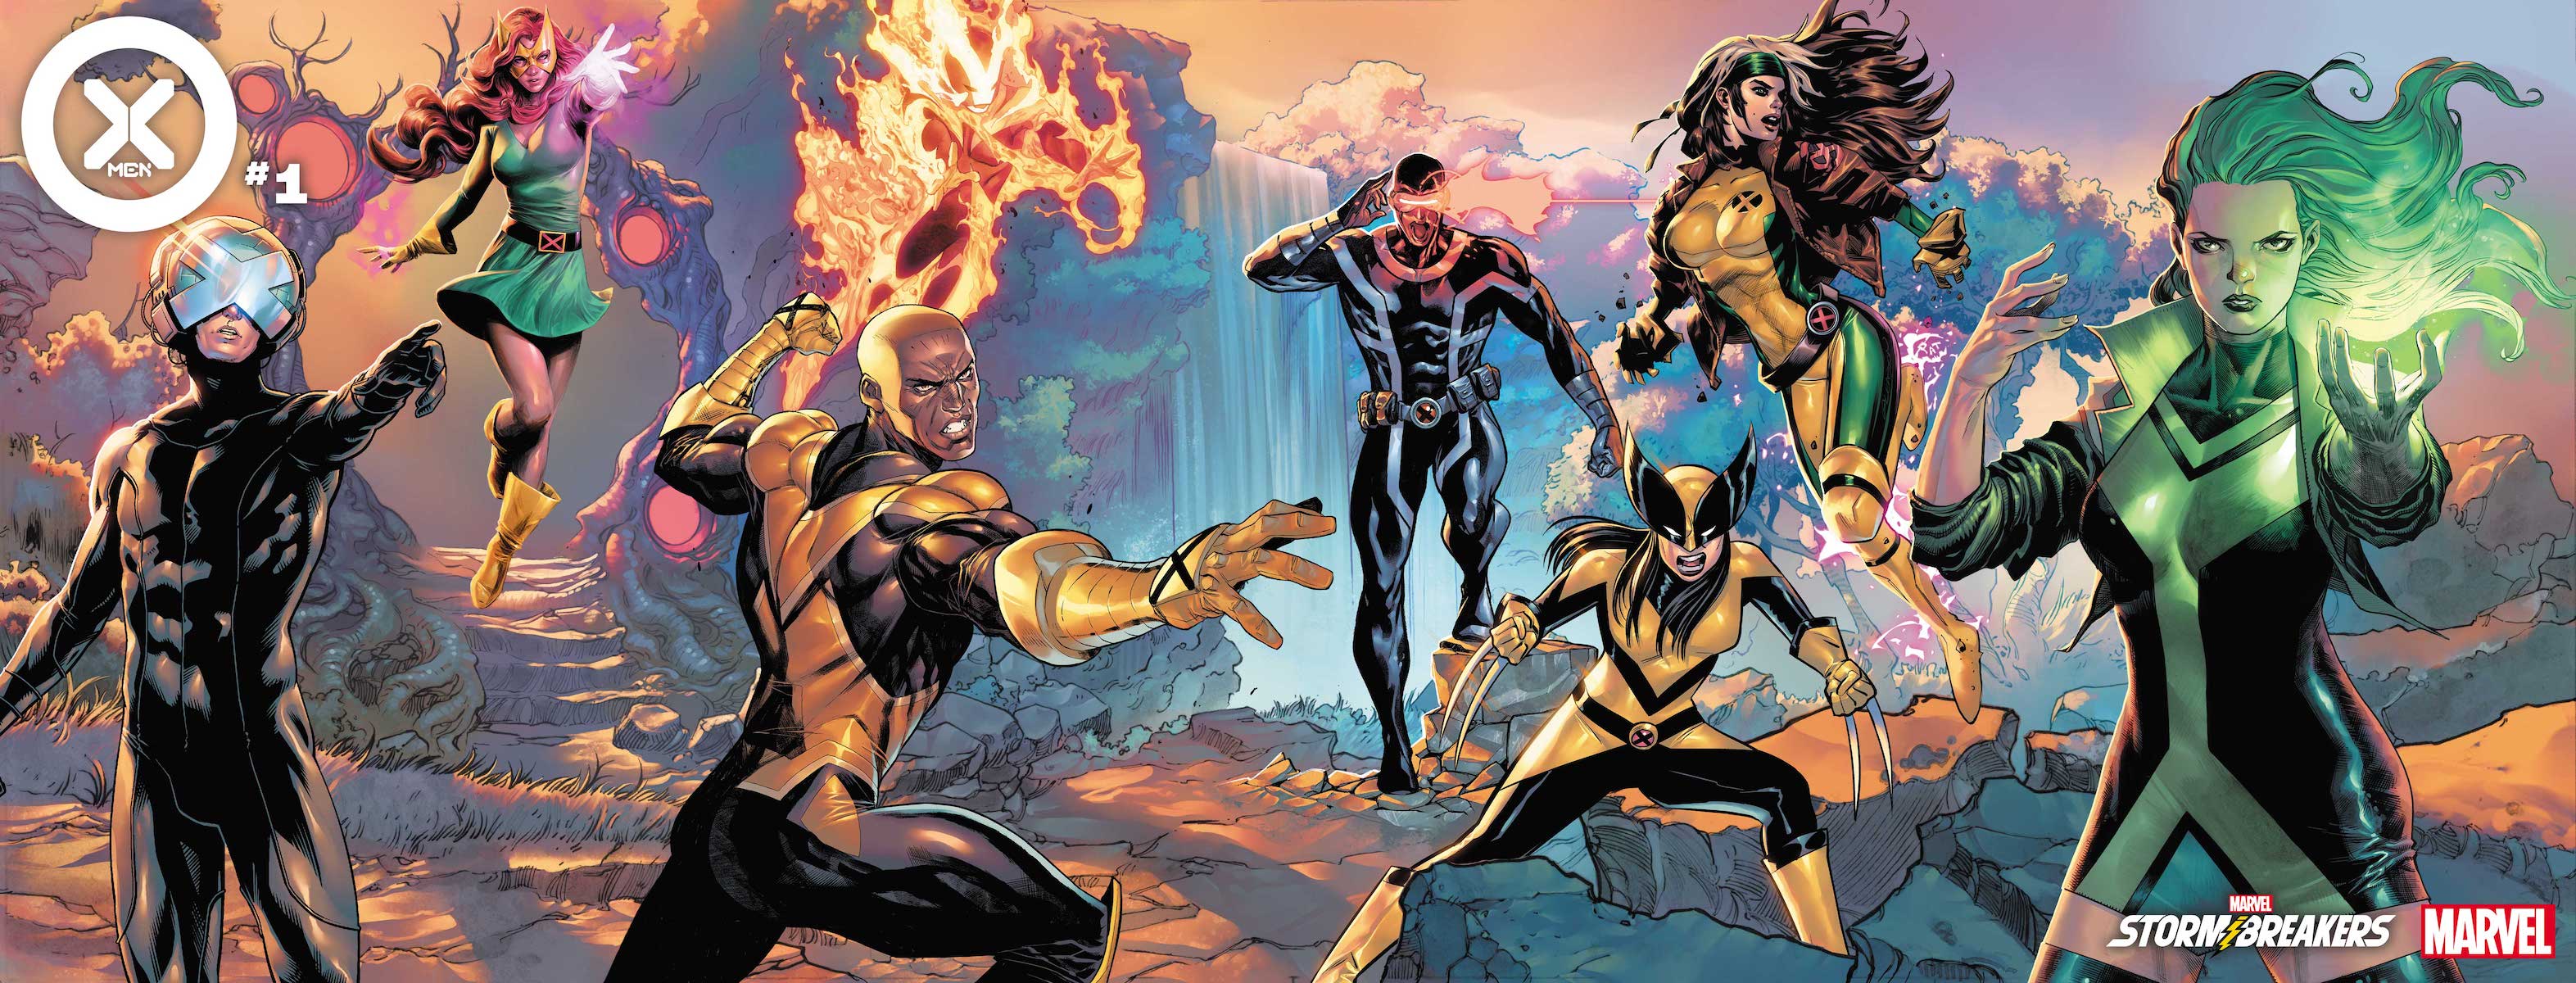 X-Men #1 Stormbreakers Connecting Covers by Juann Cabal, Carmen Carnero, Peach Momoko, Iban Coello, R.B. Silva, Natacha Bustos, Patrick Gleason, Joshua Cassara & Alejandro Sanchez